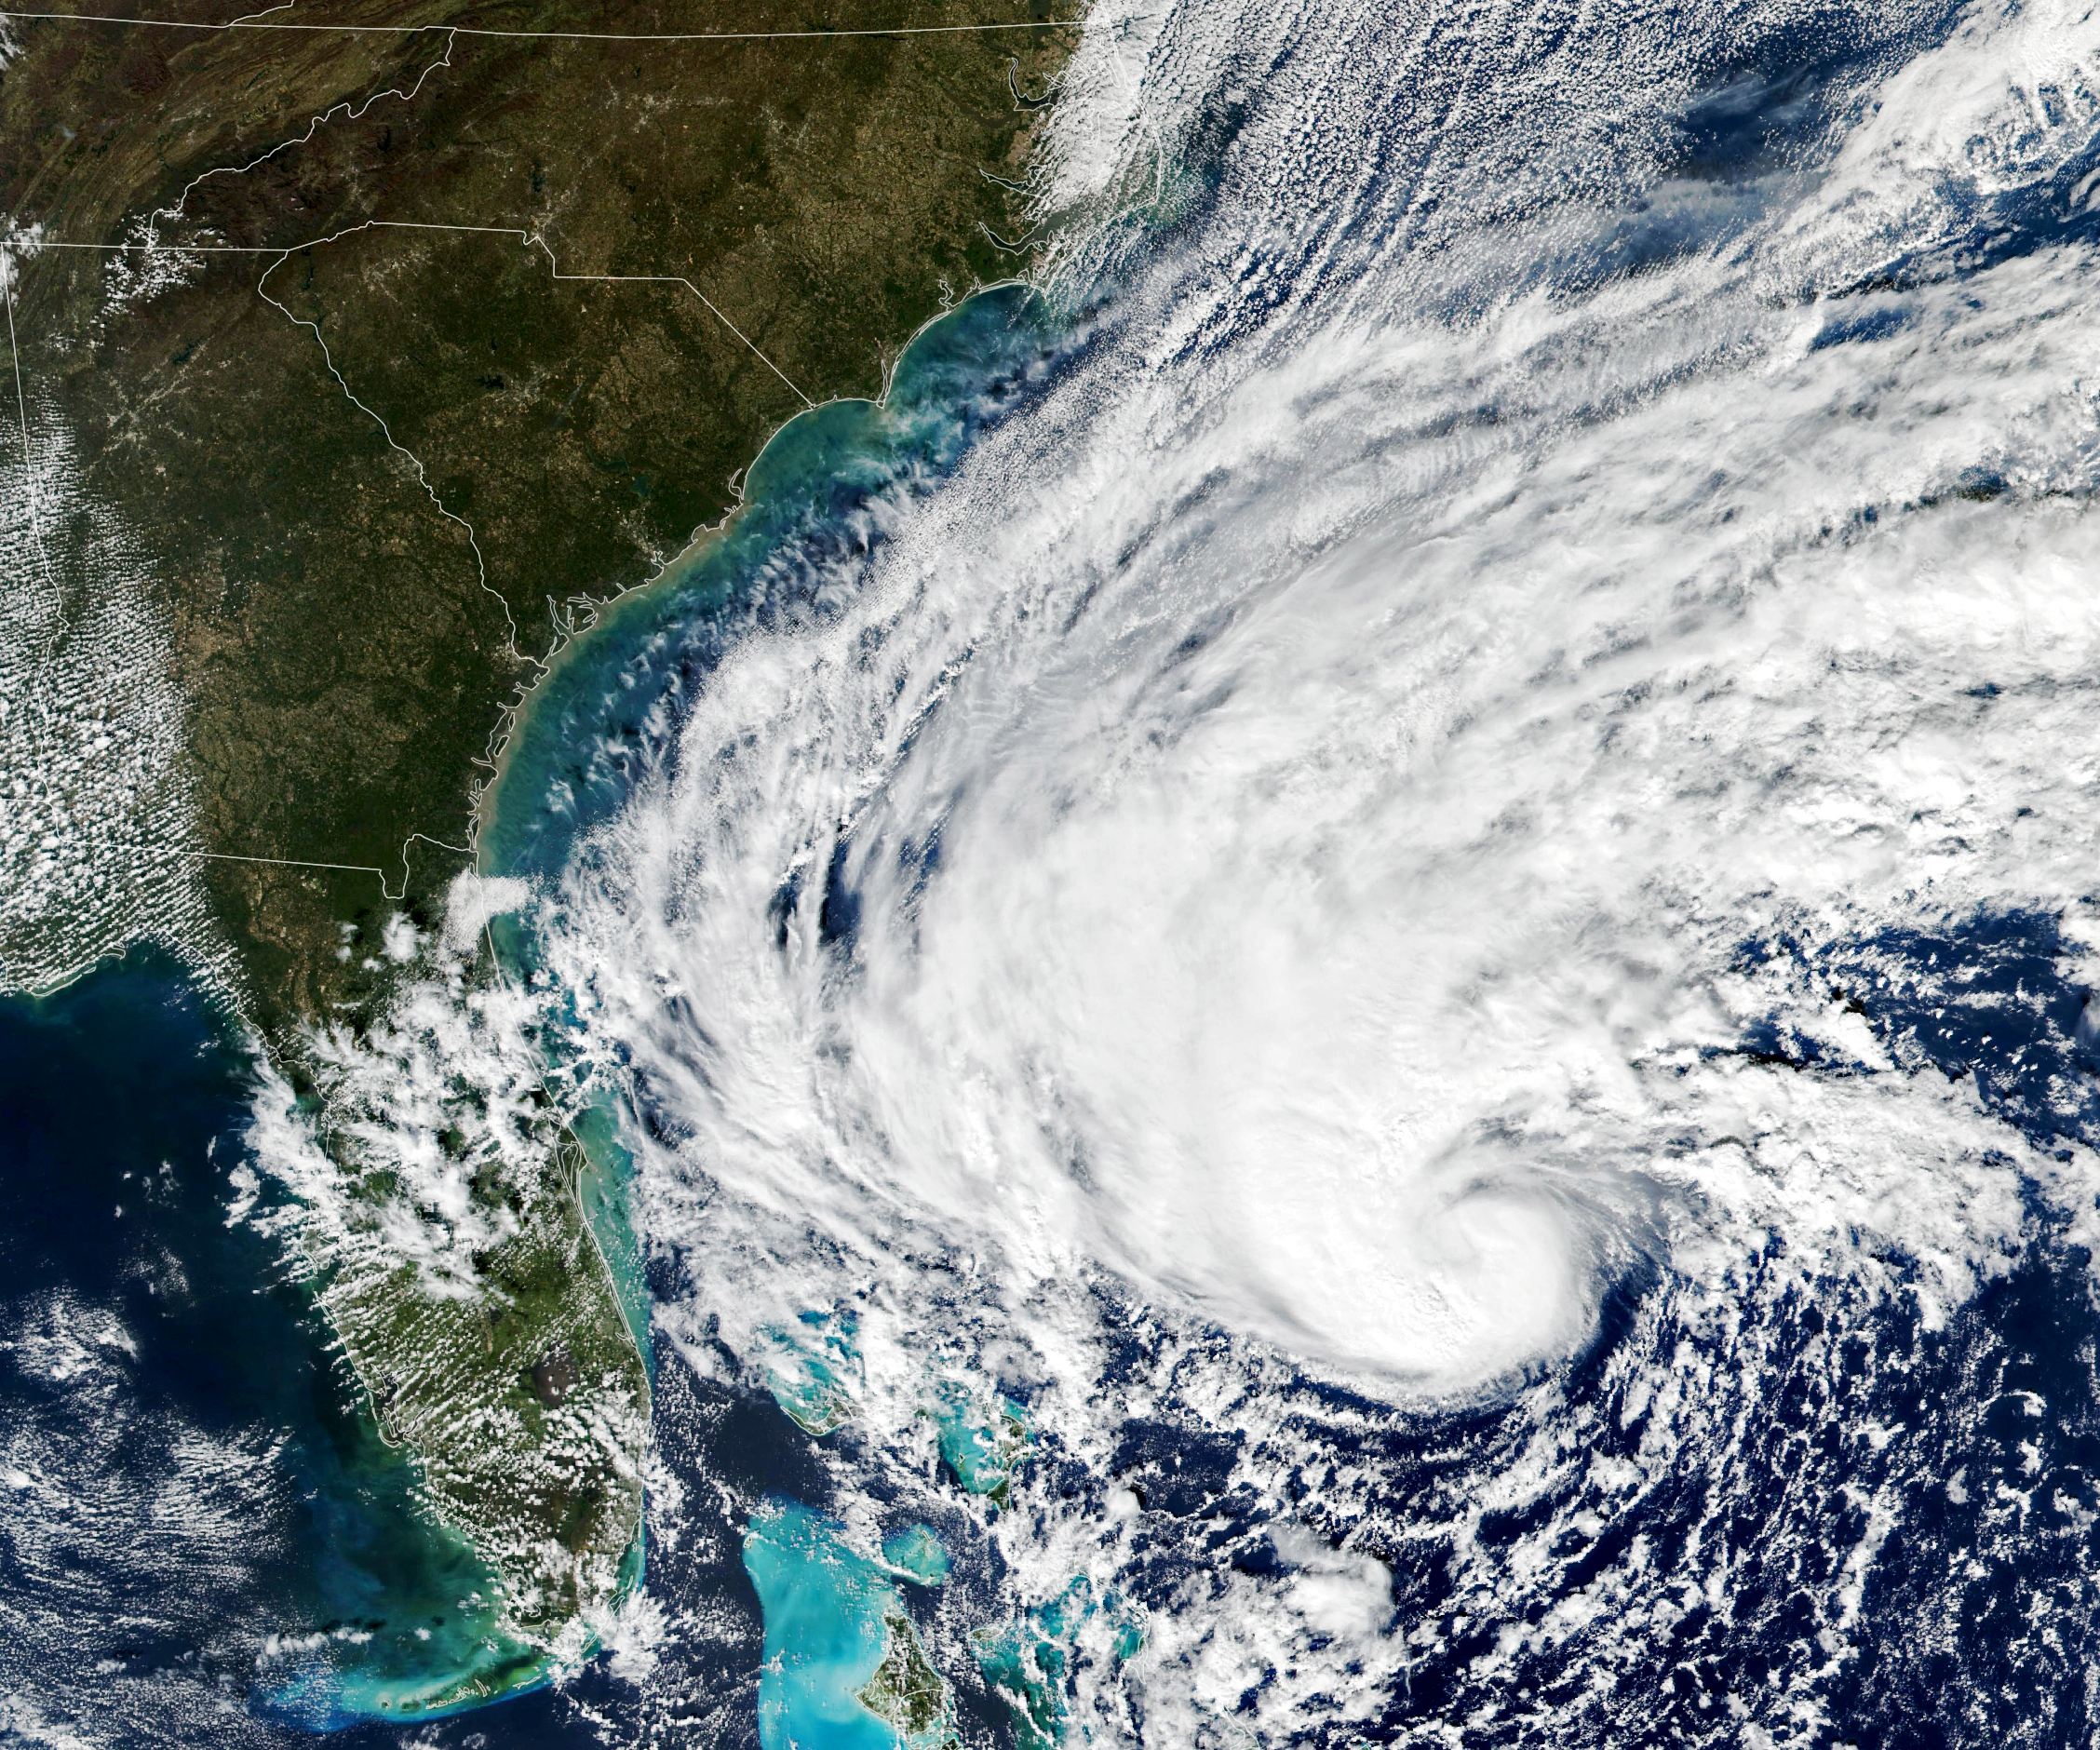 Hurricane Nicole Approaching the East Coast of Florida